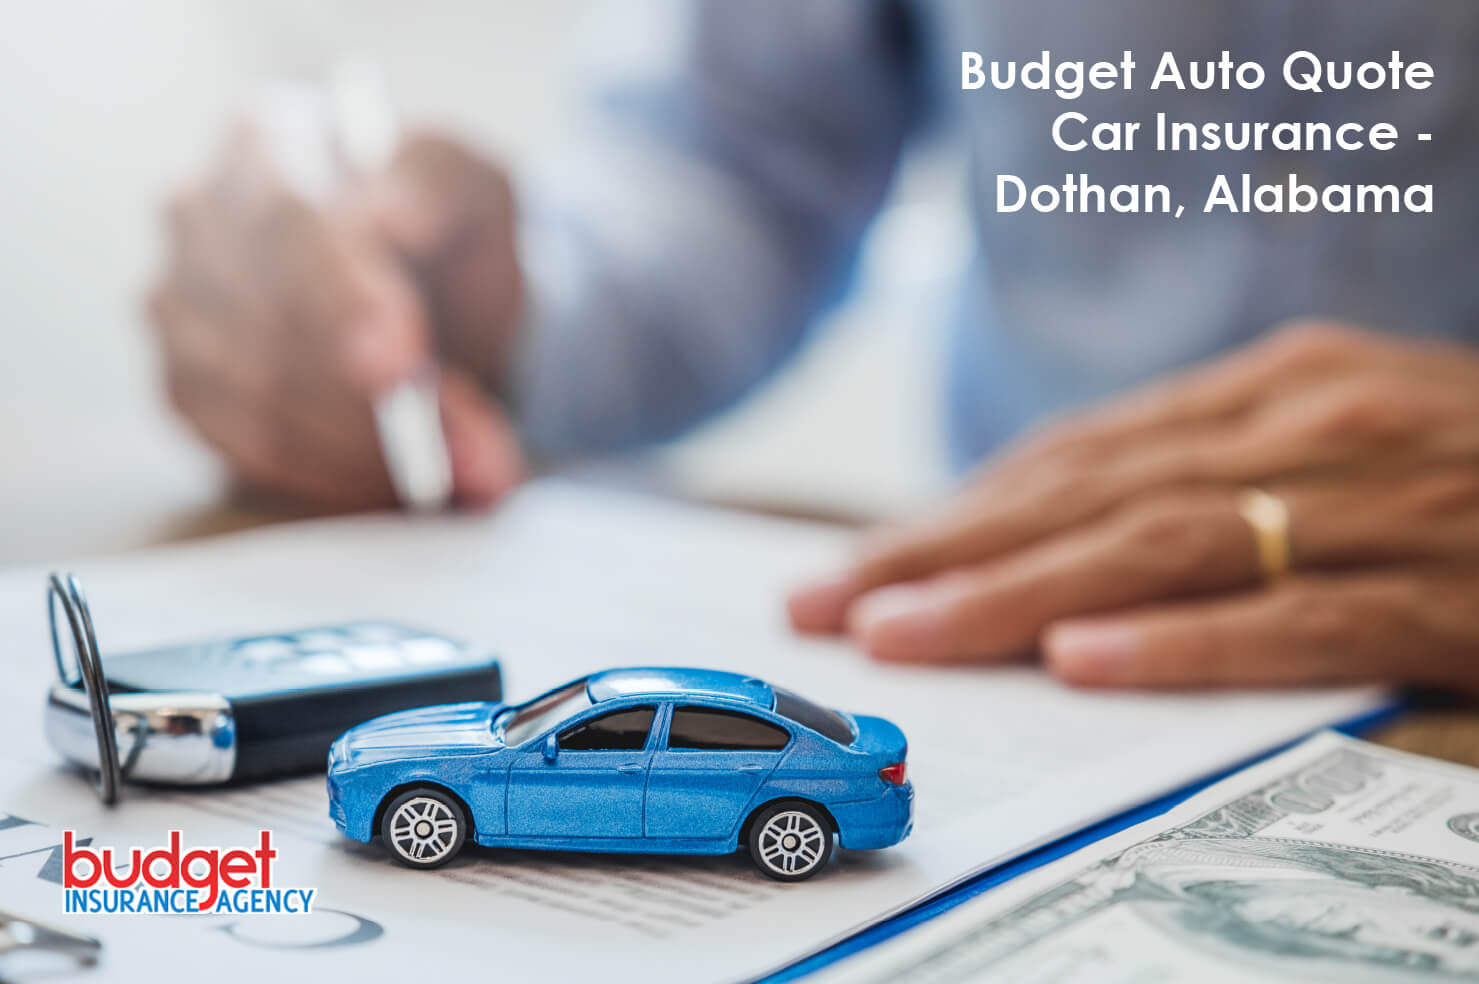 Budget Auto Quote Car Insurance - Dothan, Alabama